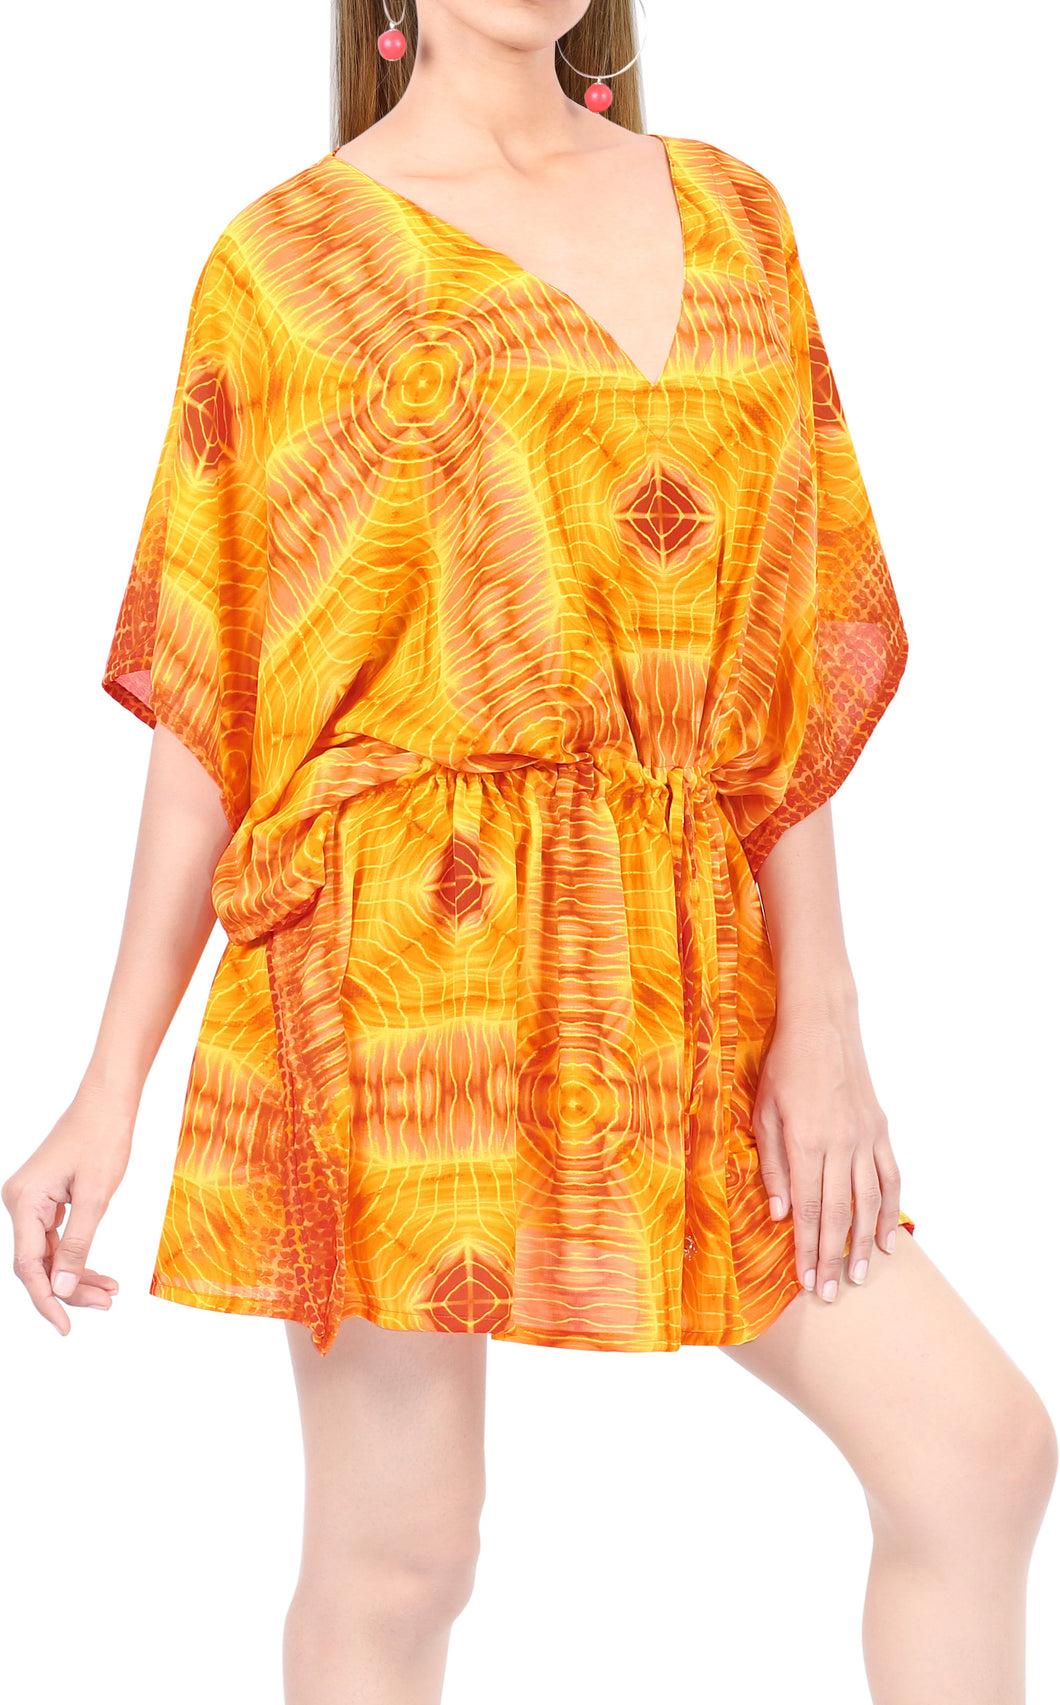 LA LEELA kimono cover ups for swimwear women Orange_Y317 OSFM 16-28W [XL- 4X]